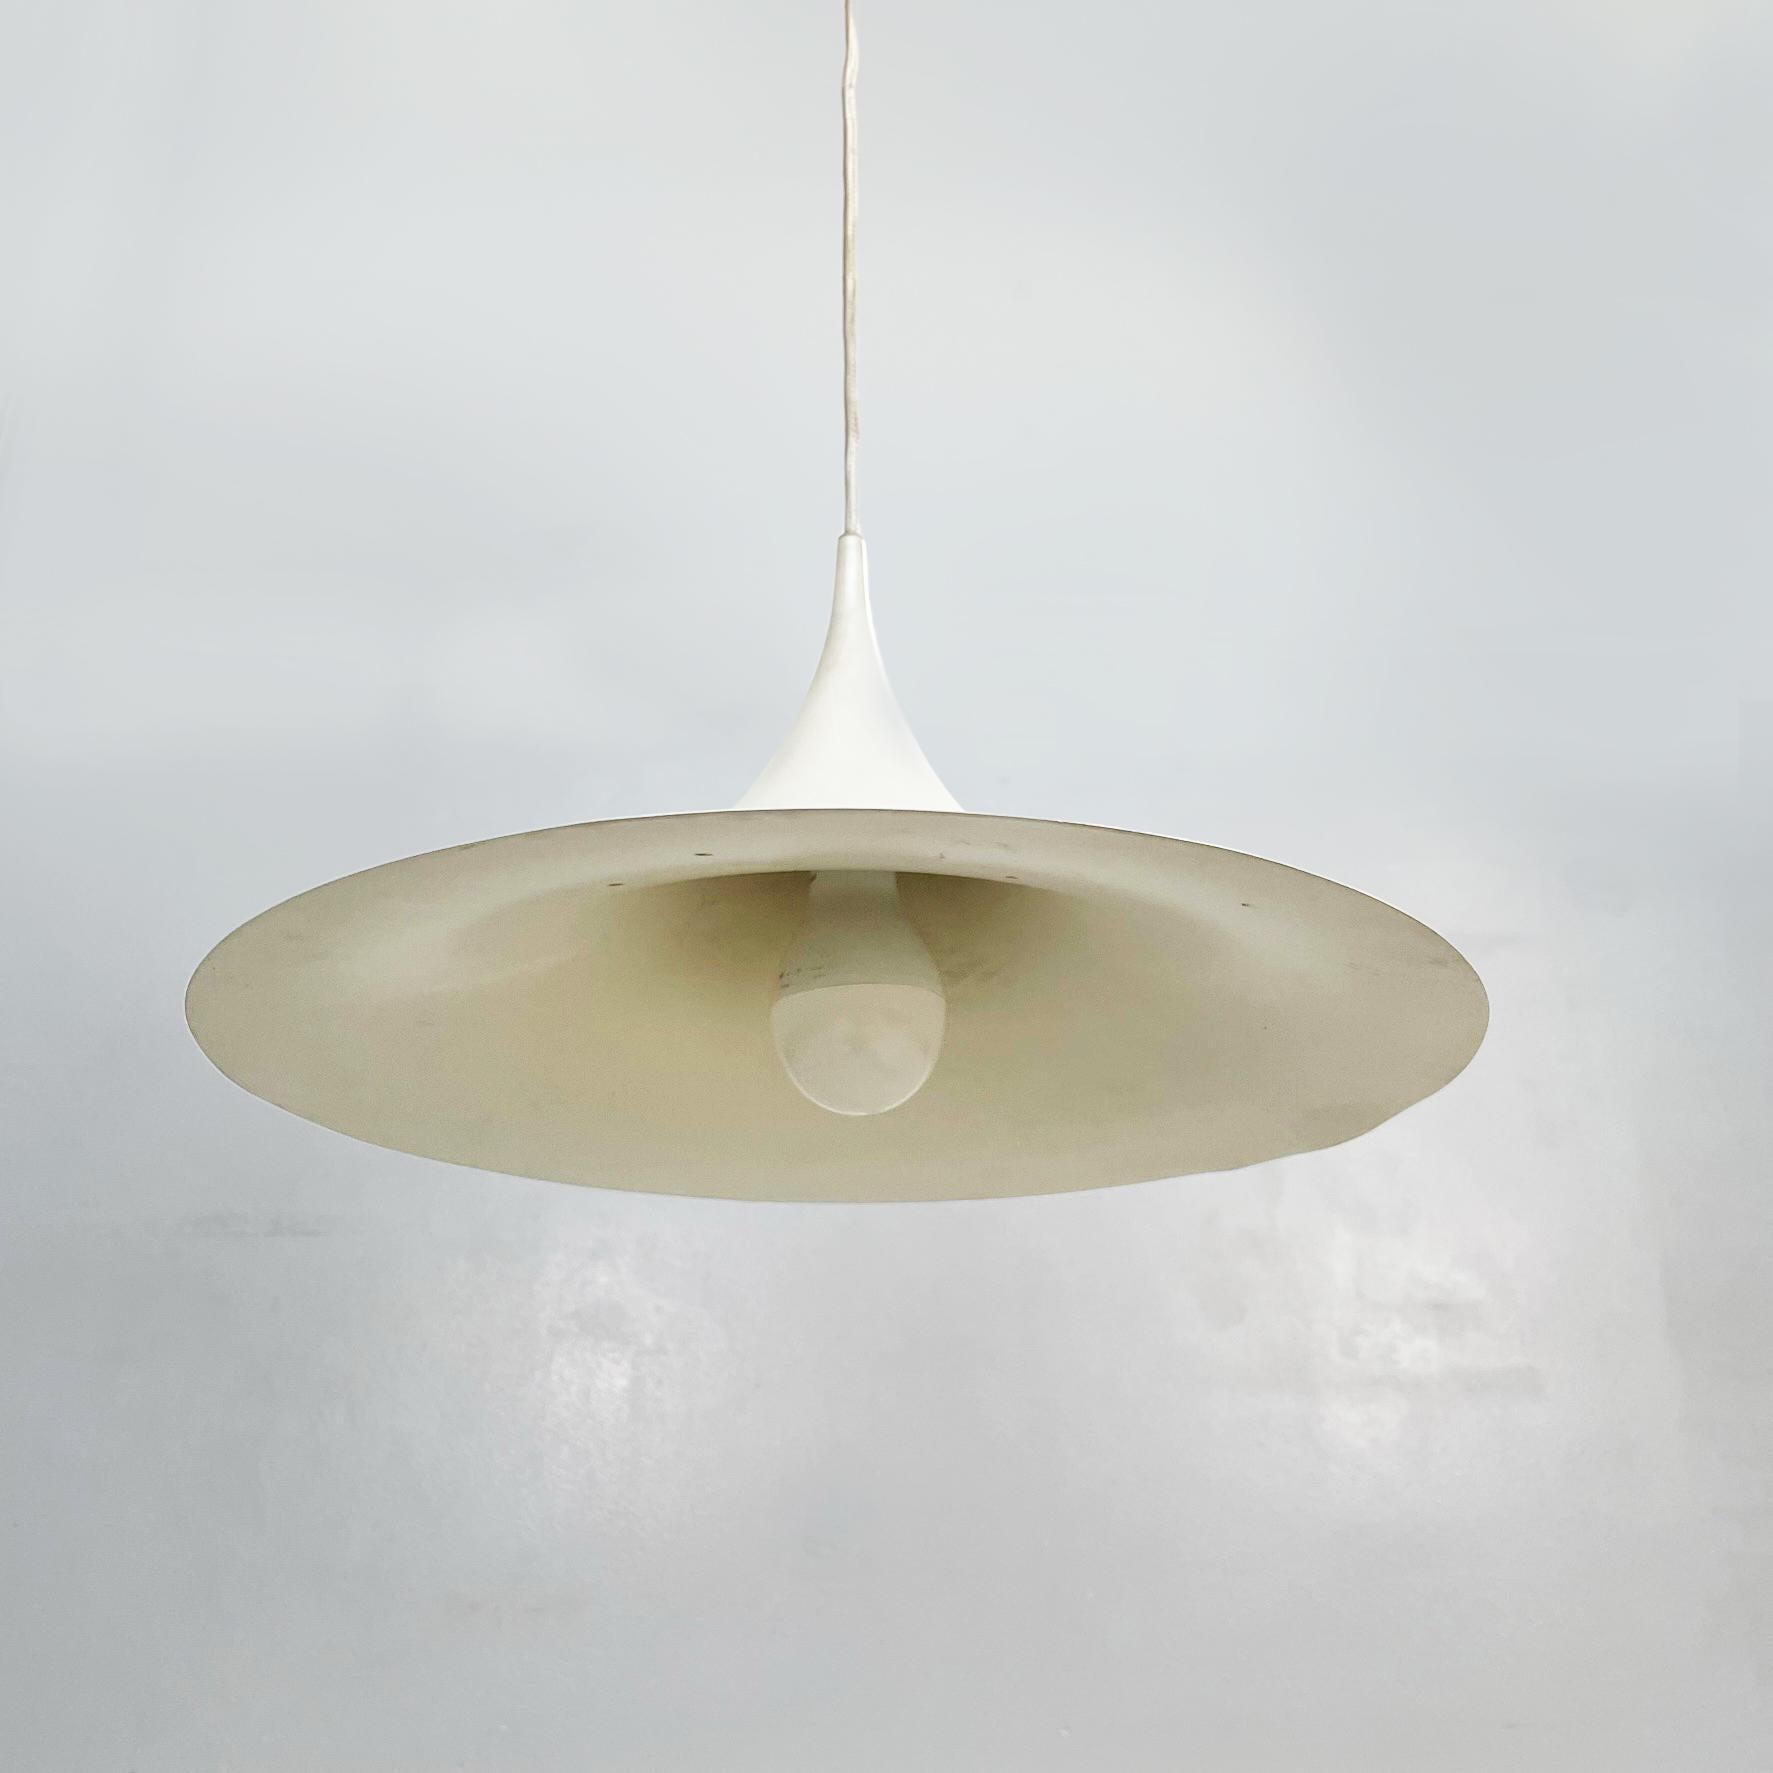 Late 20th Century Italian Modern Ceiling Lamp Semi by Bonderup & Thorup for Fog & Mørup, 1970s For Sale